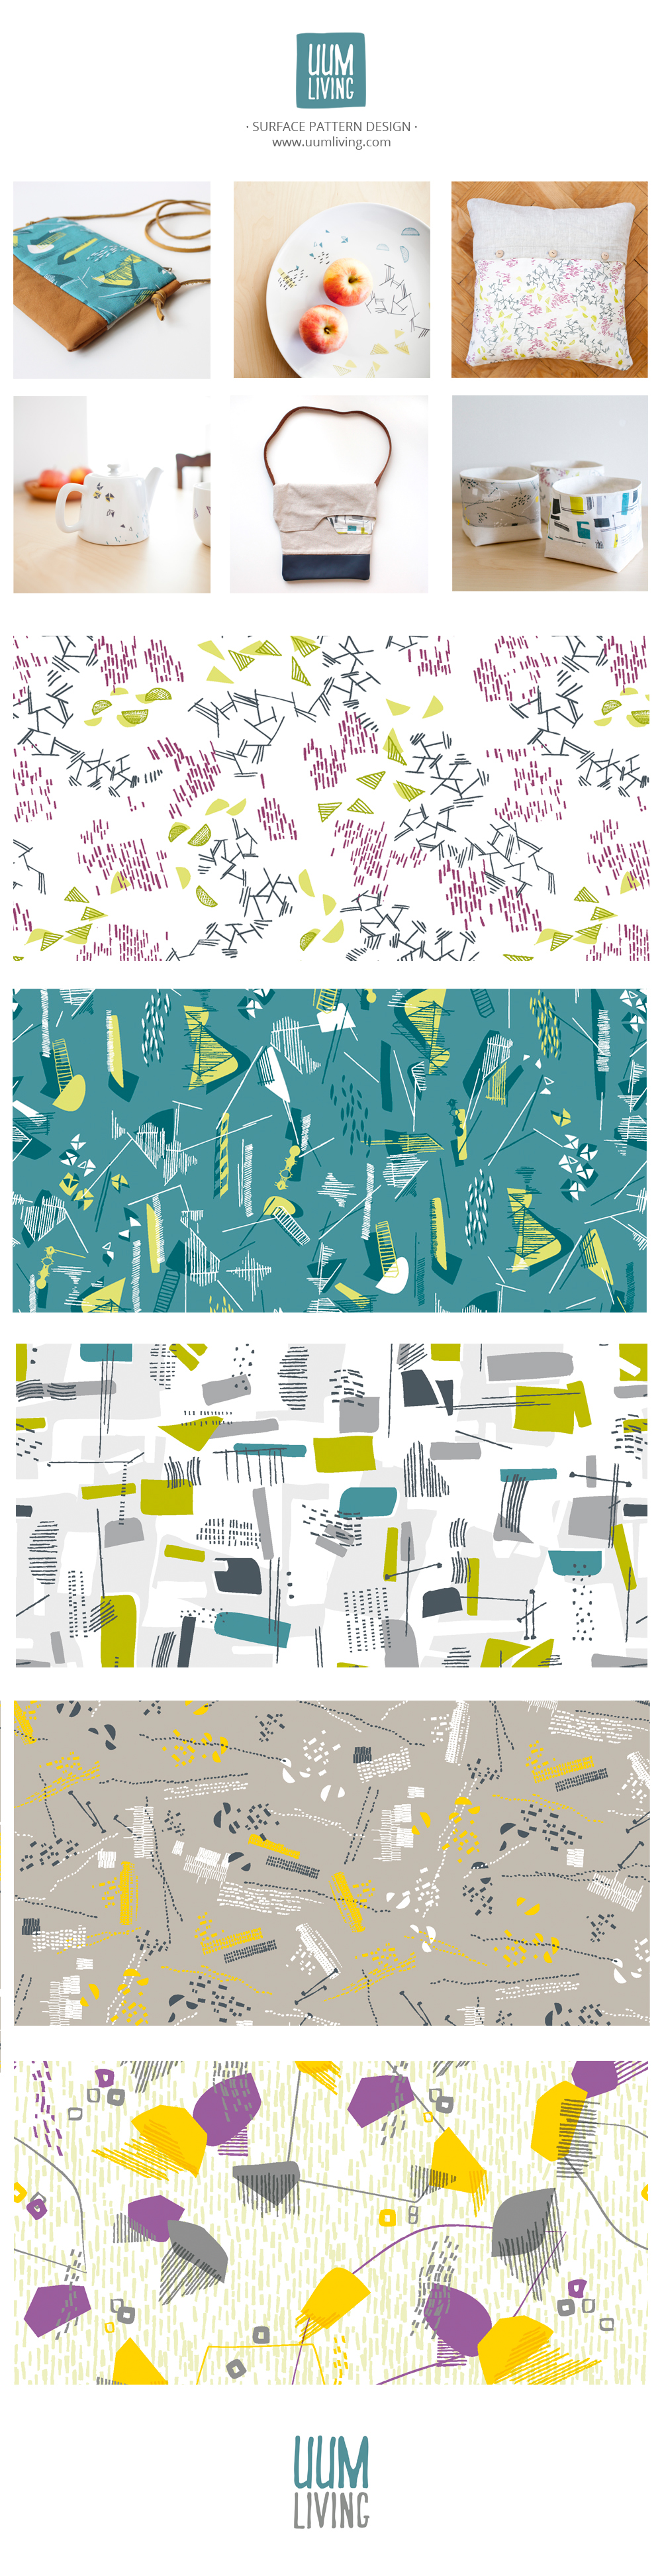 pattern illustracion Surface Pattern estampados Diseño de estampados diseño de producto textil porcelana uum living